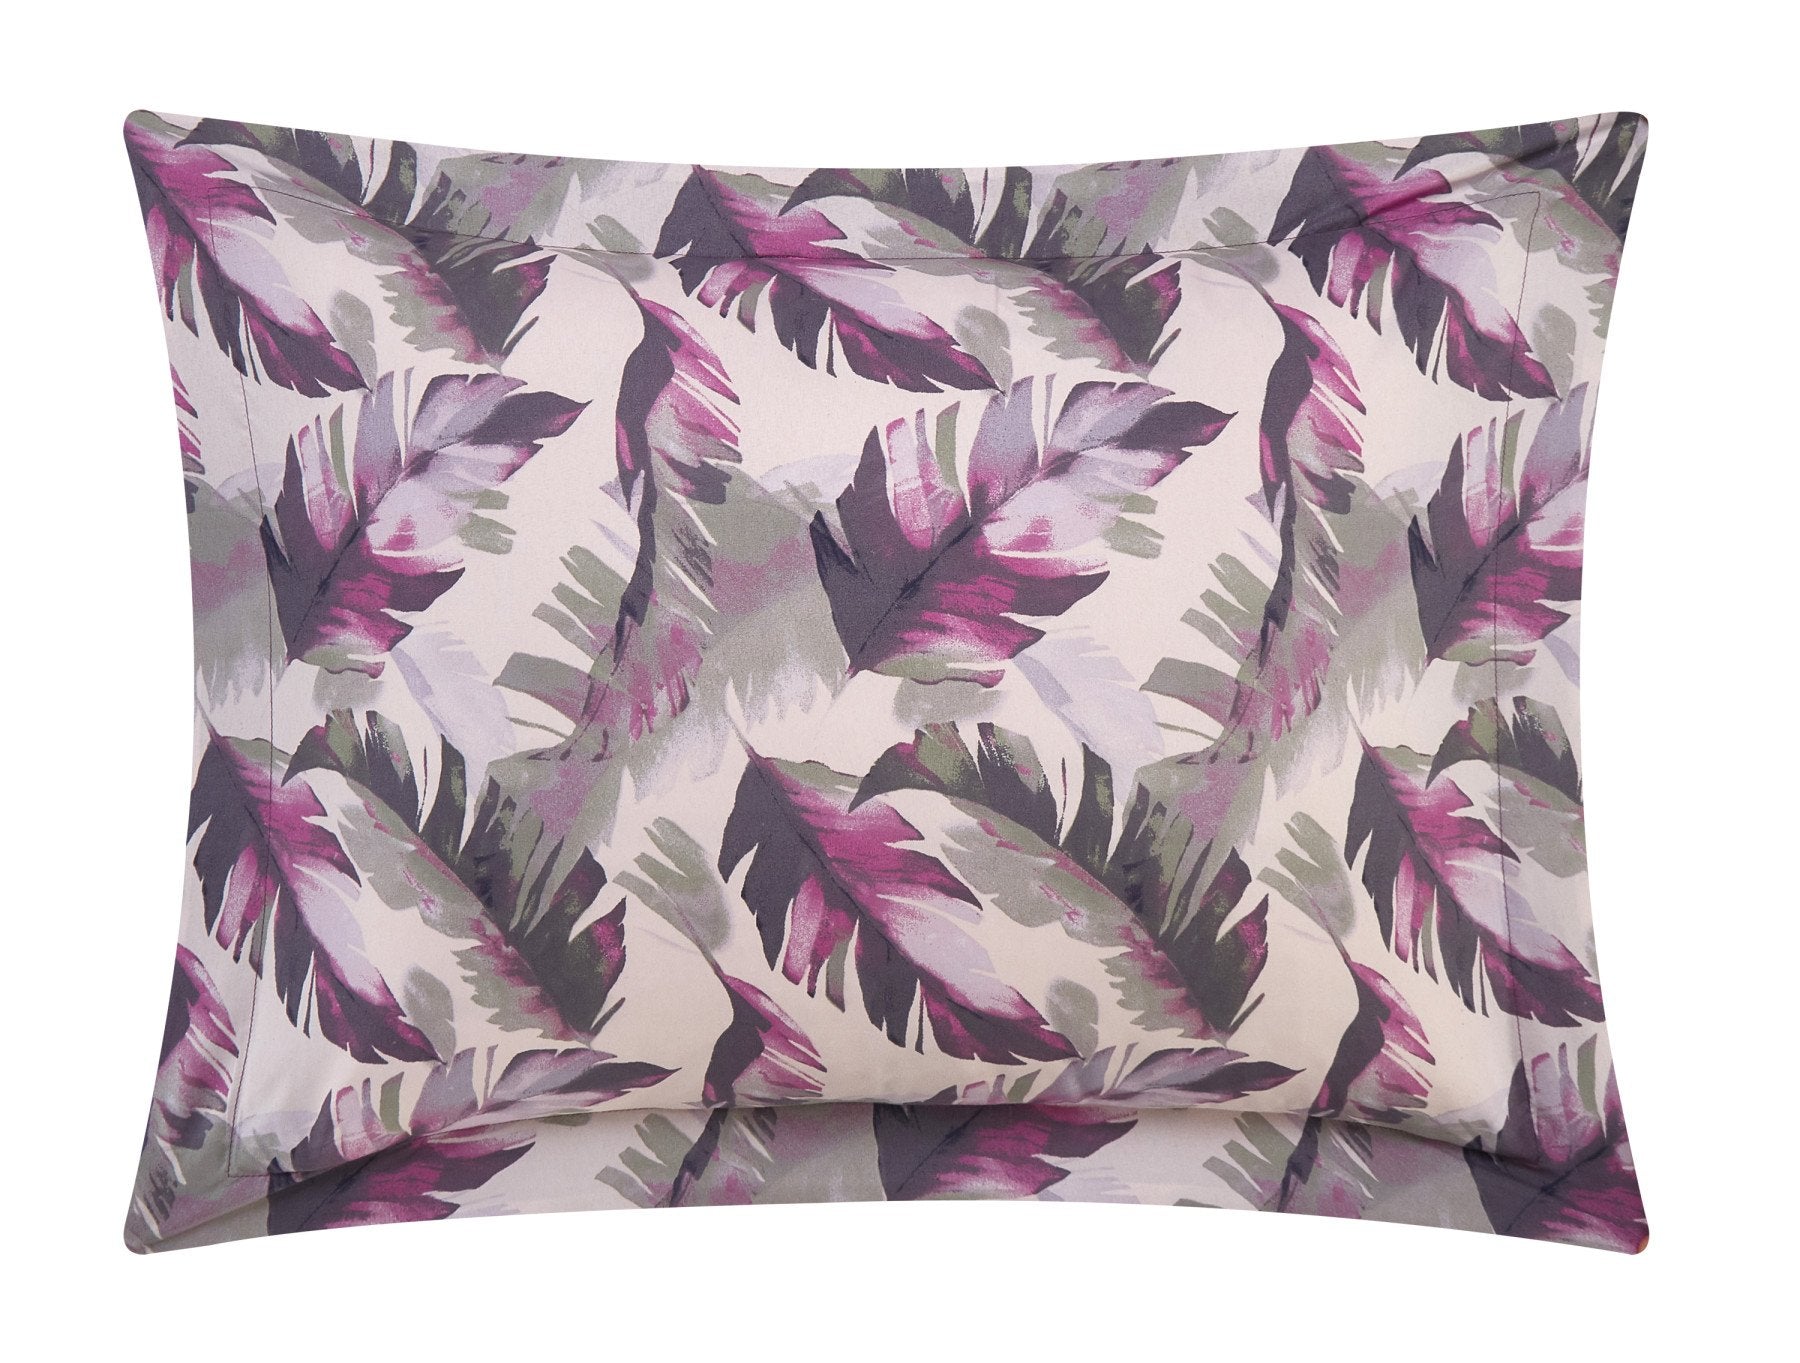 Kala 12 Piece Floral Comforter and Quilt Set